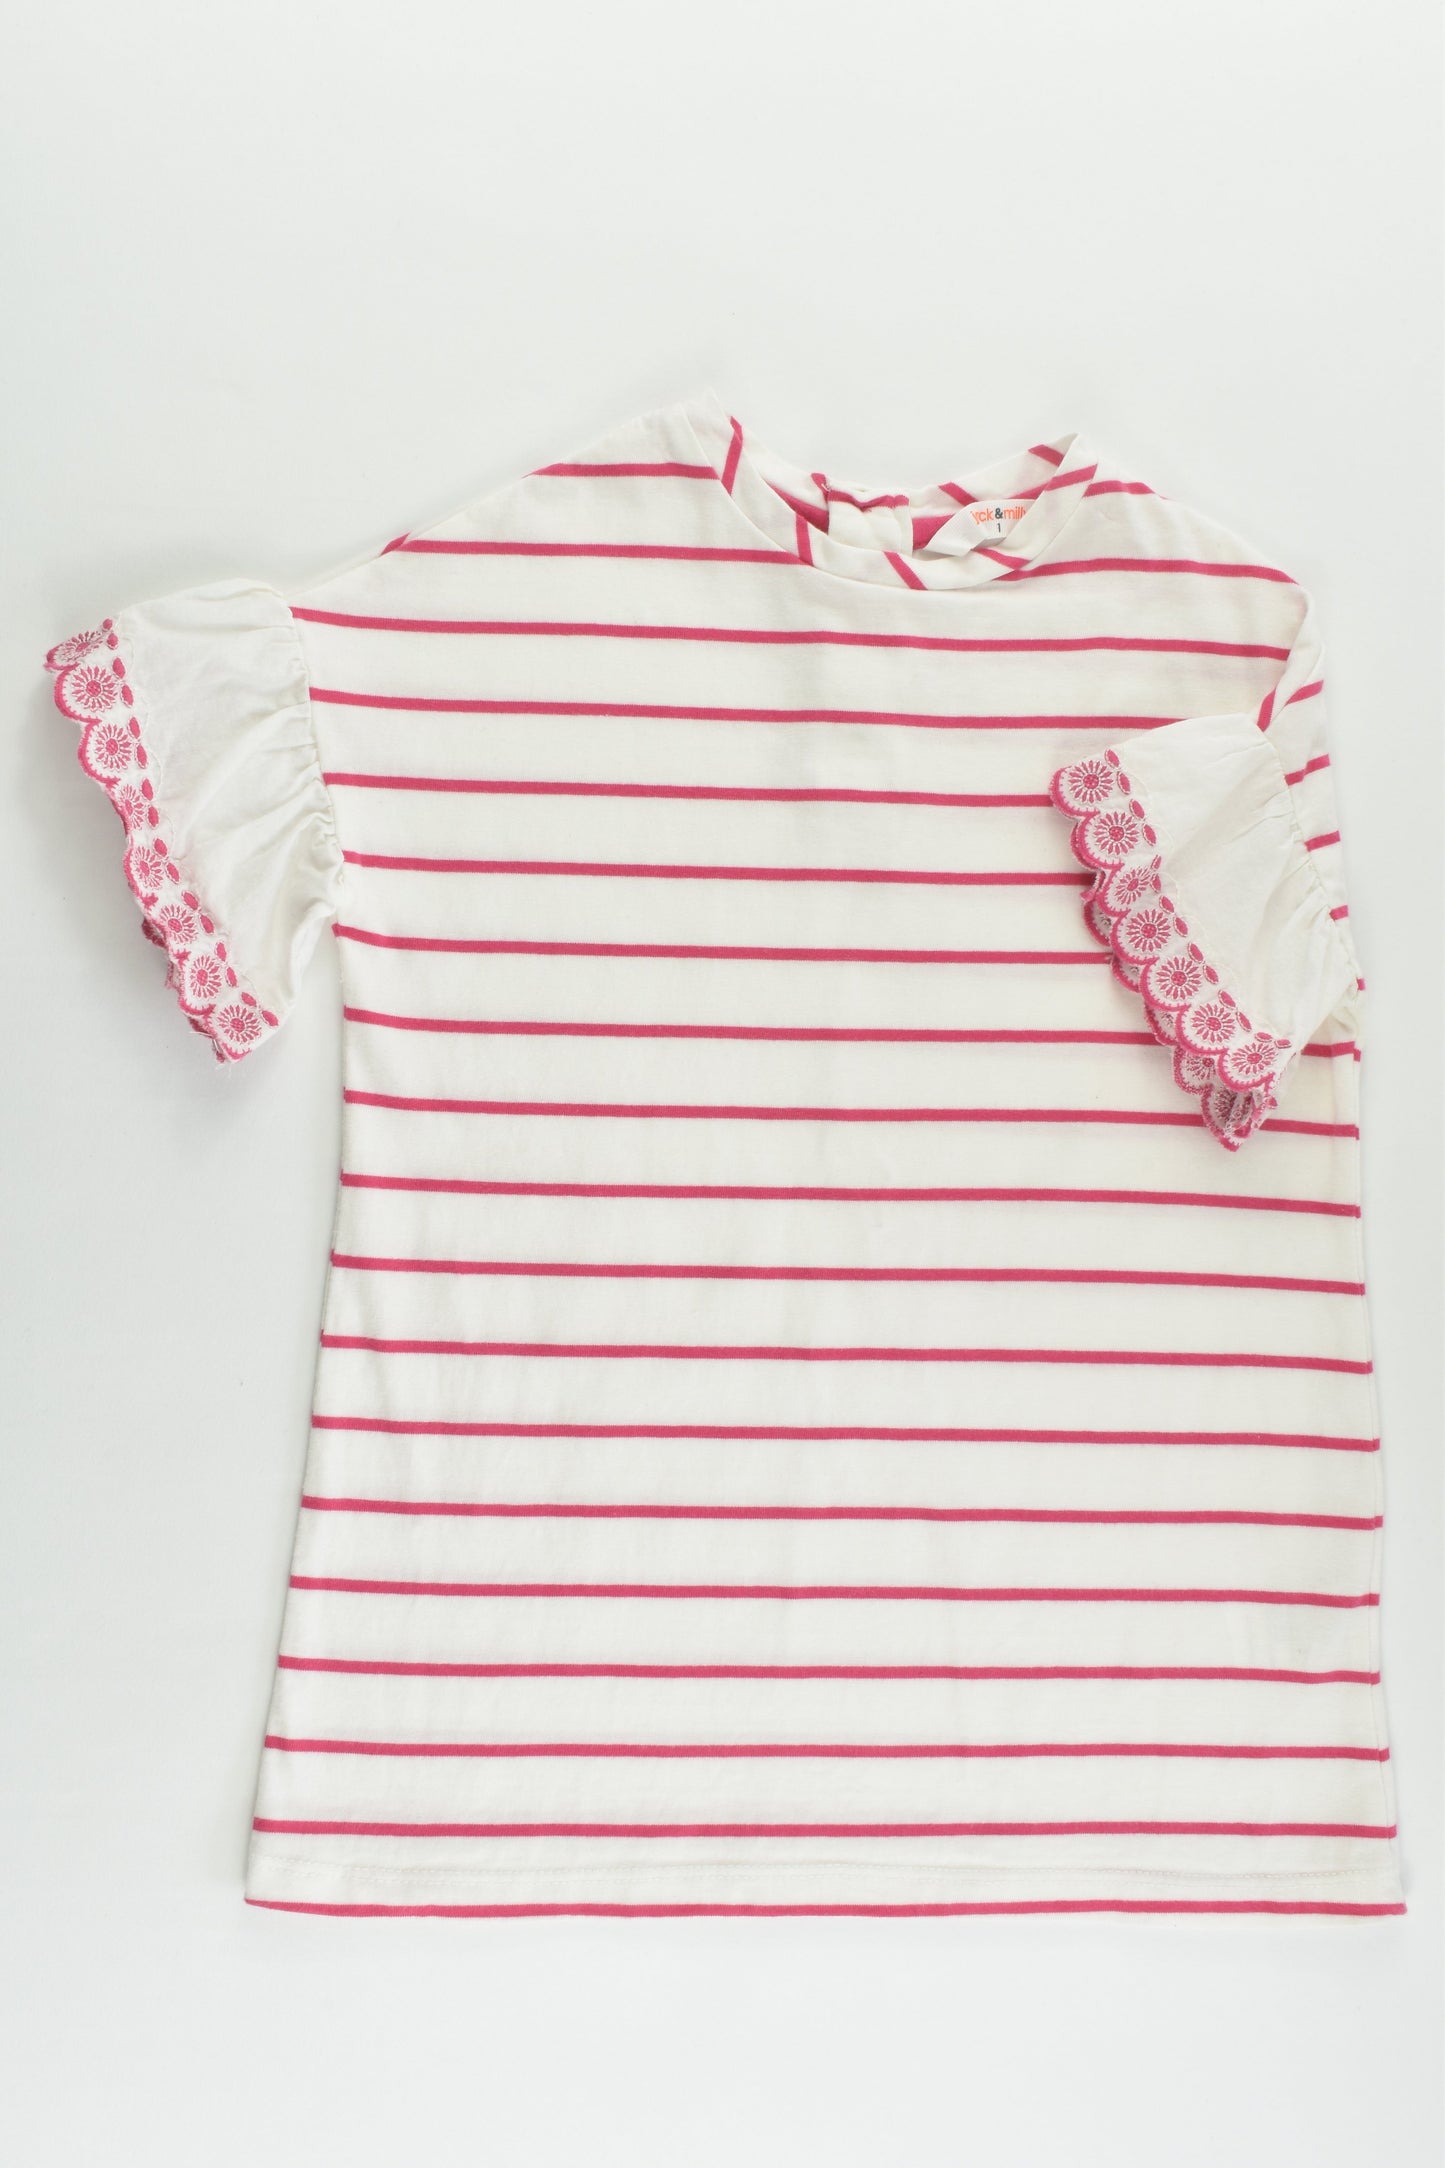 Jack & milly Size 1 Striped Tunic/Dress